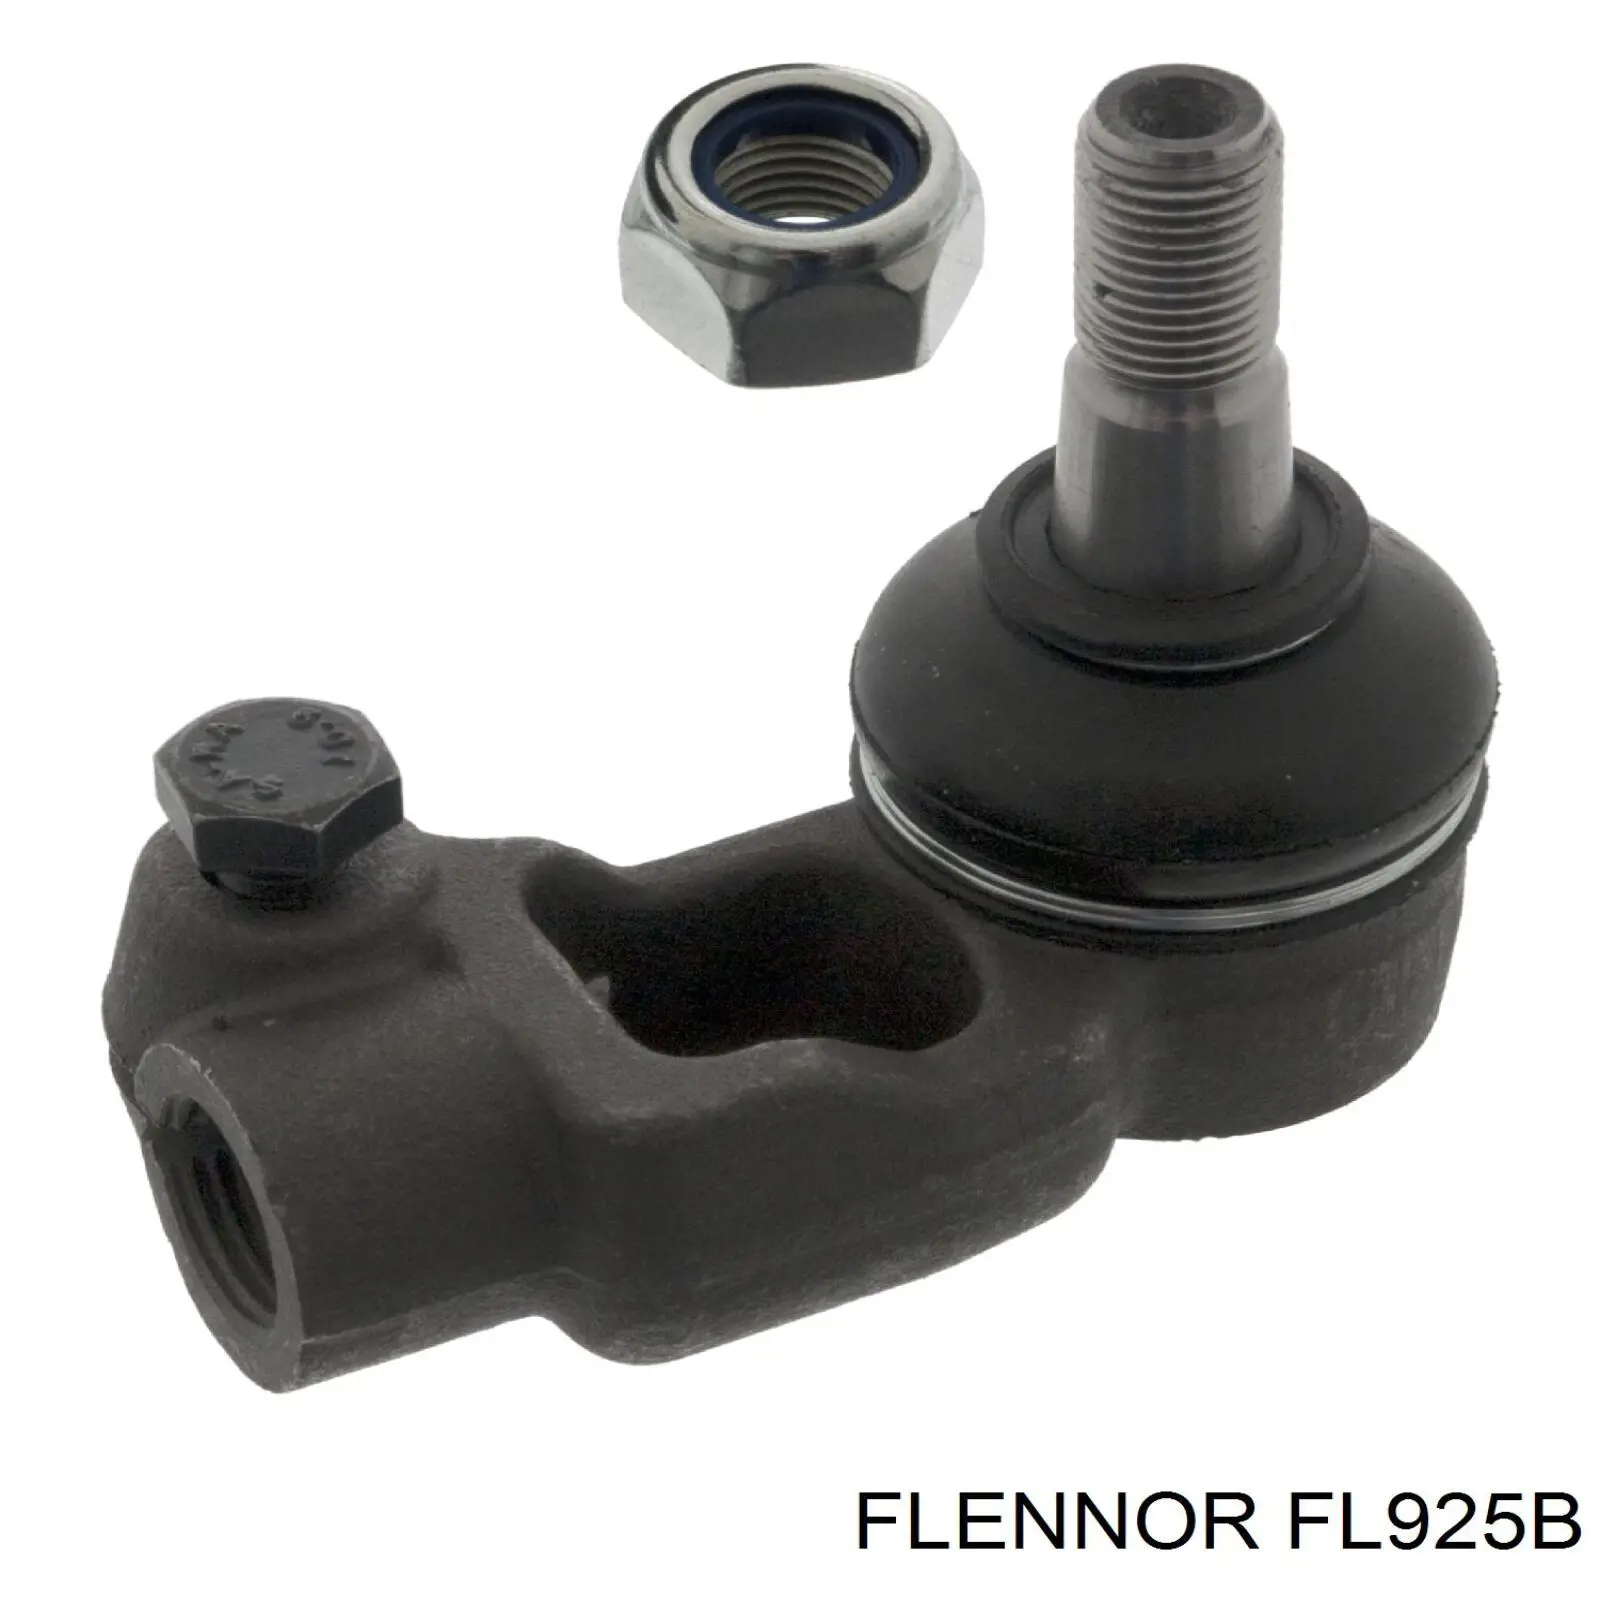 FL925B Flennor rótula barra de acoplamiento exterior